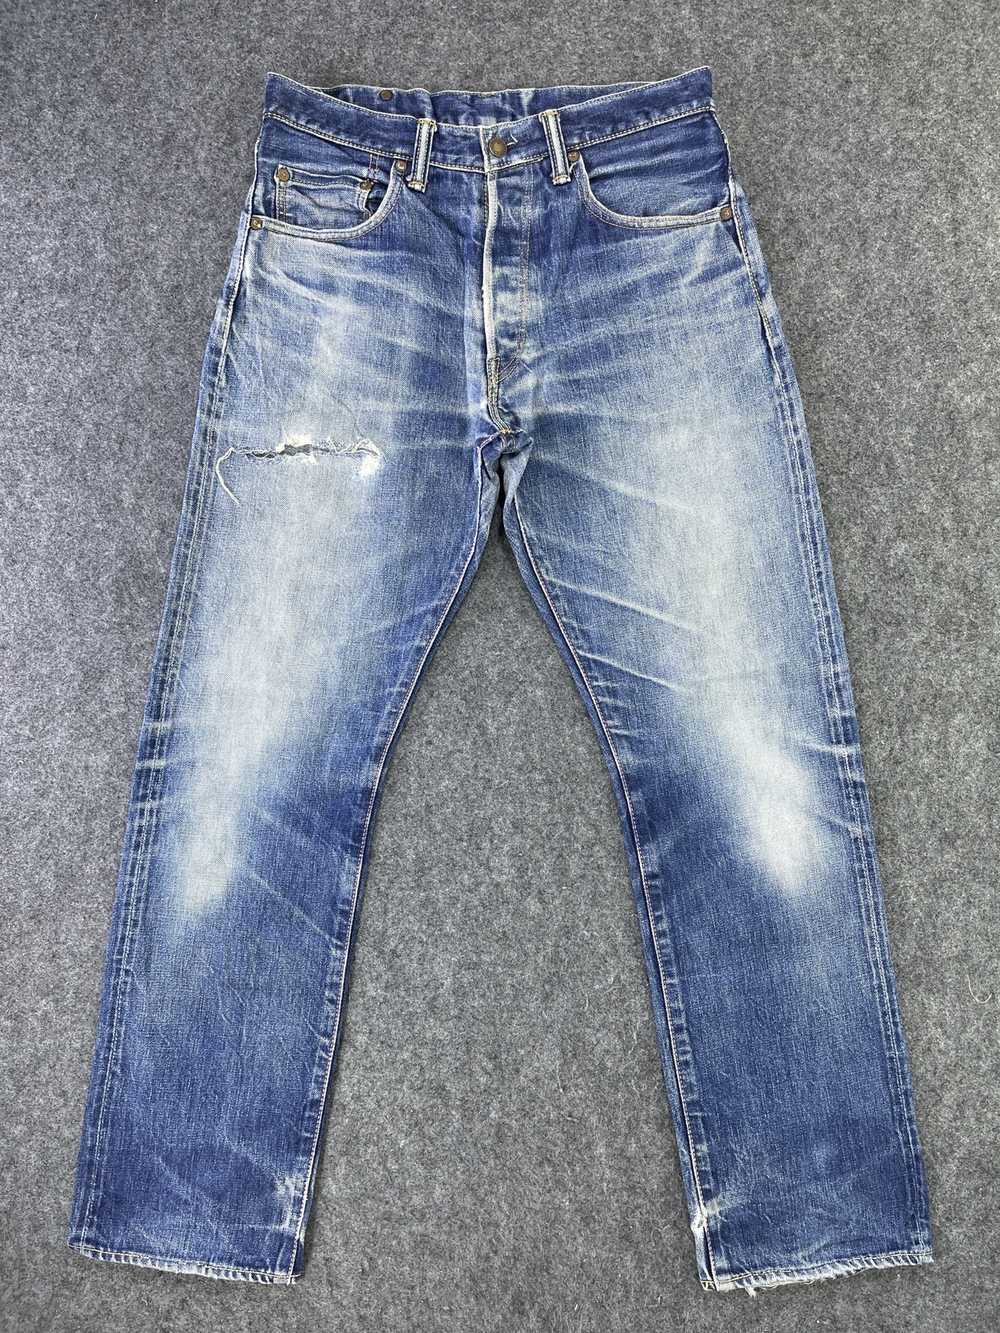 Momotaro Jeans Carpenter Jeans Men's 15.7 Oz. Japanese Denim Work